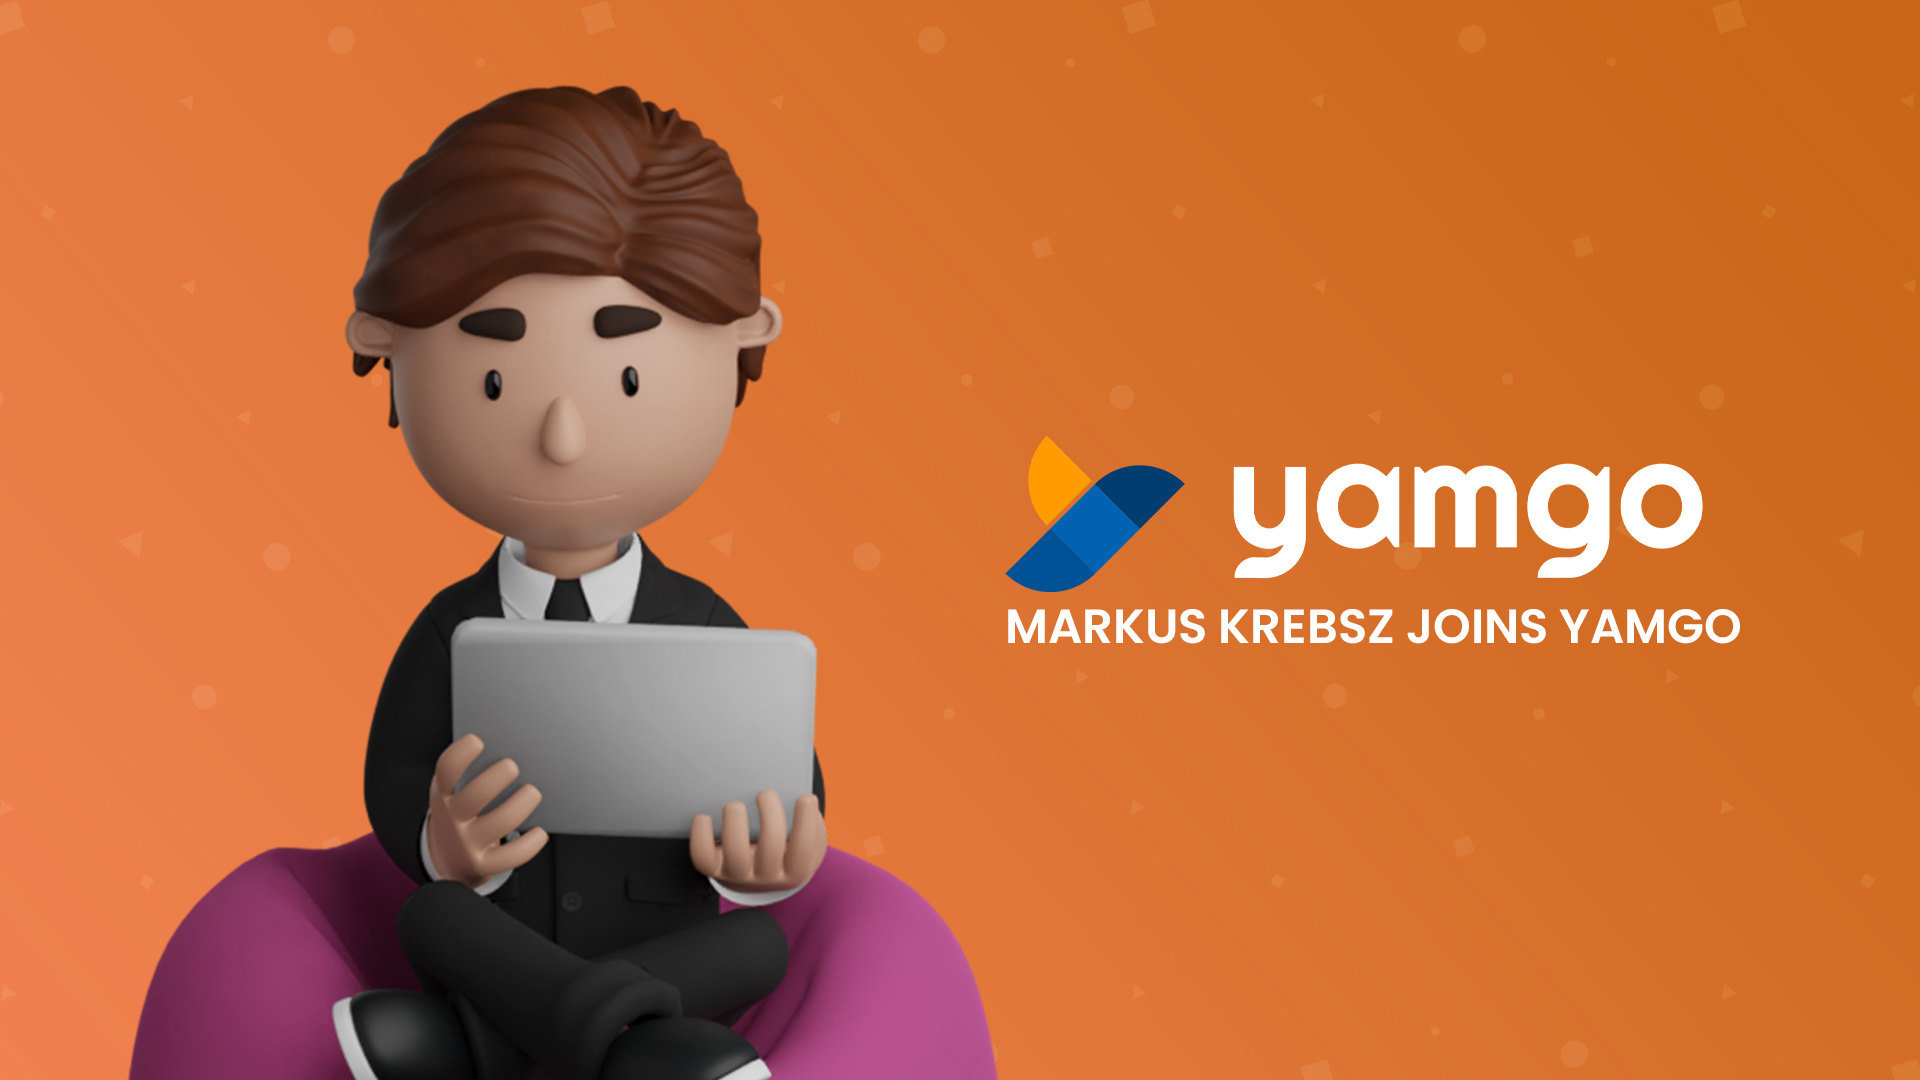 Yamgo announces neobank director and government advisor Markus Krebsz as new board member